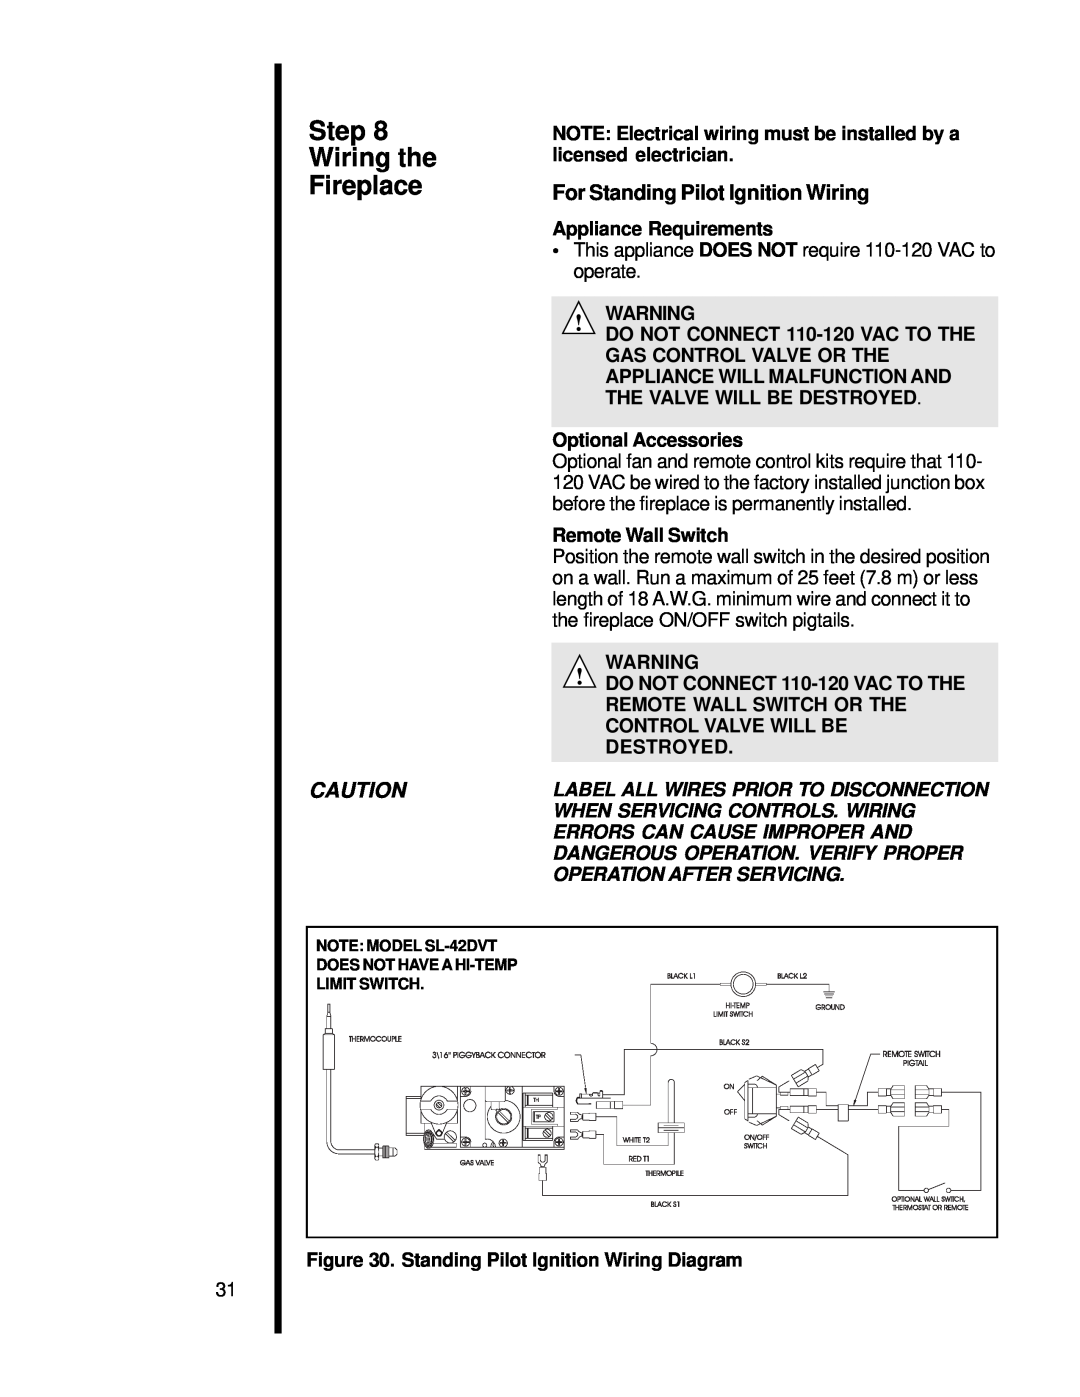 Heat & Glo LifeStyle 6000 DVTFL, 8000 DVTFL, SL-42 DVT manual Step Wiring the Fireplace, For Standing Pilot Ignition Wiring 